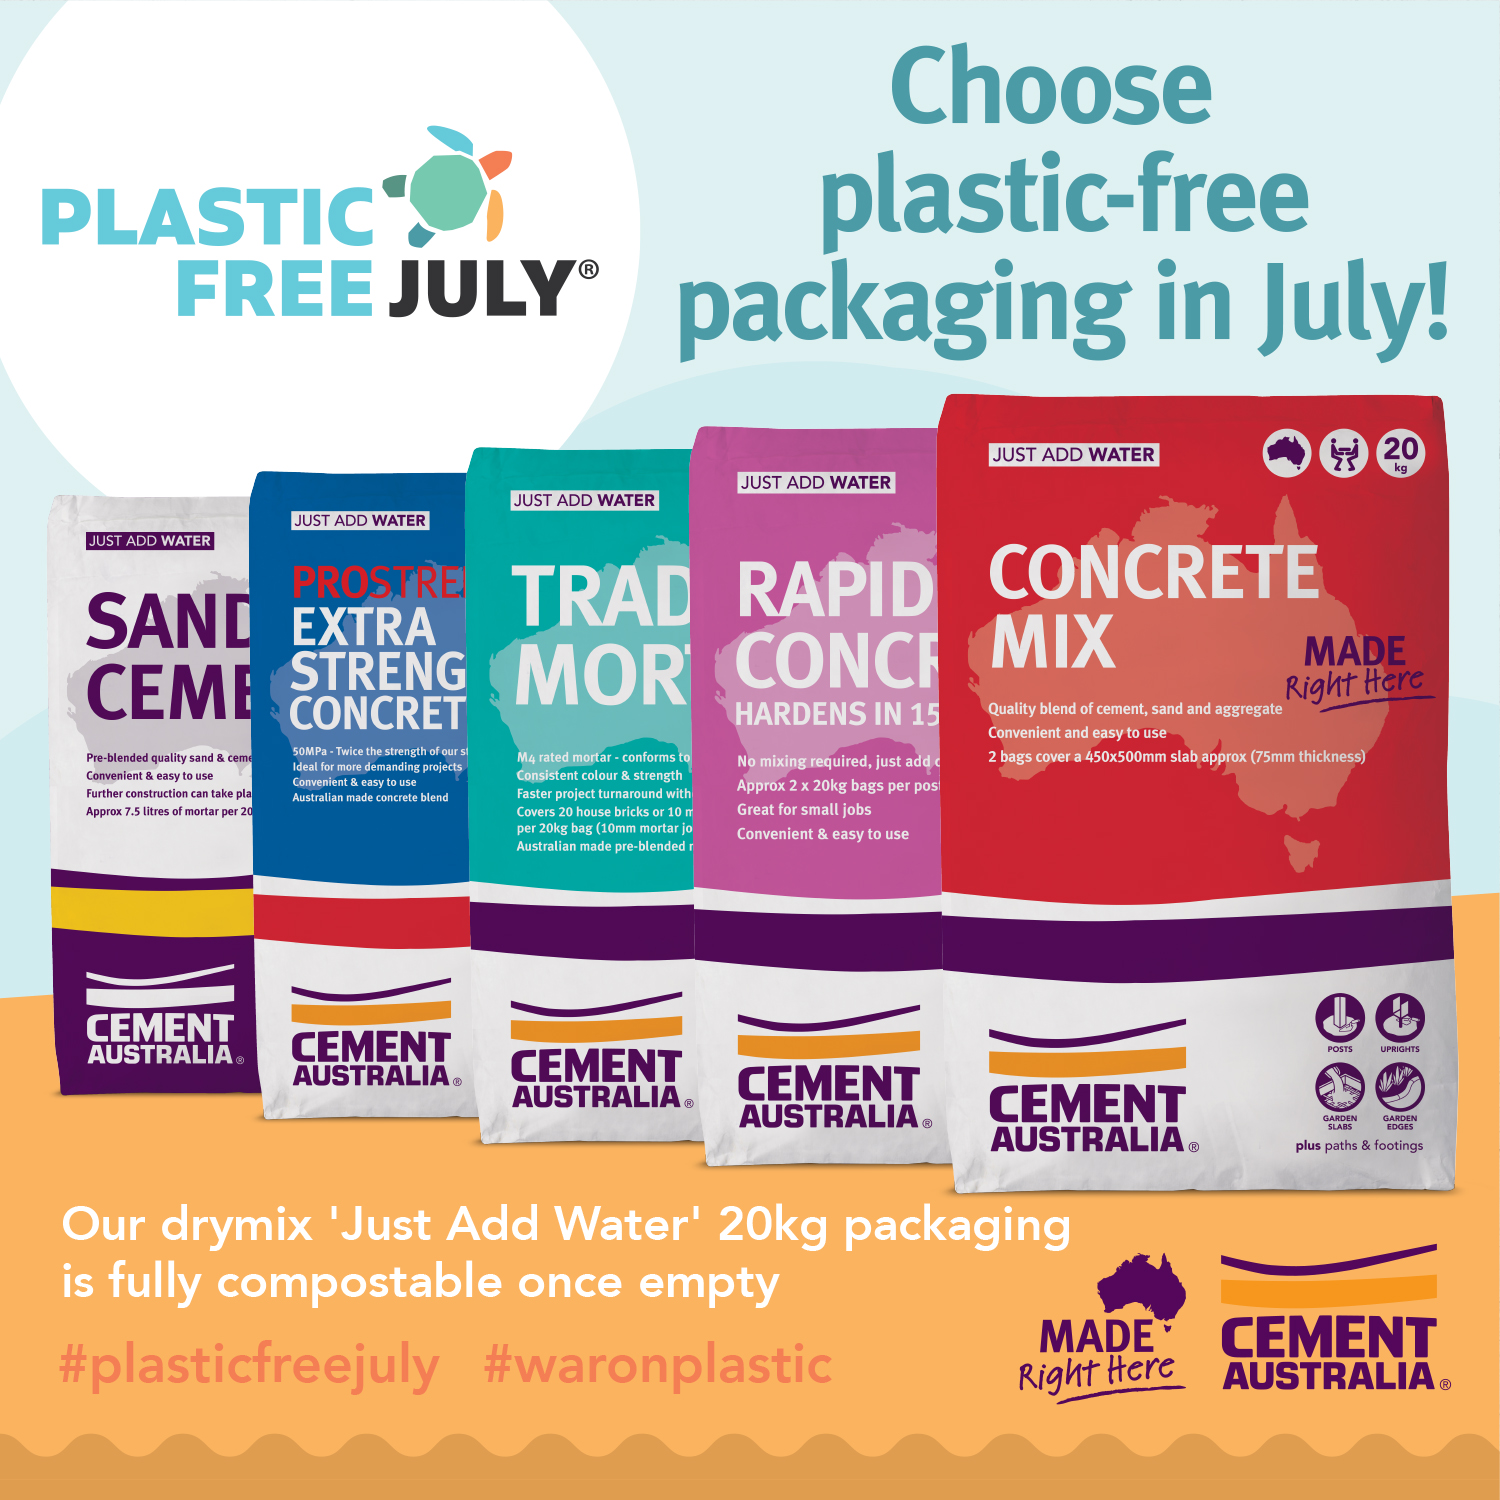 PLASTIC FREE JULY- Cement Australia chooses paper over plastic